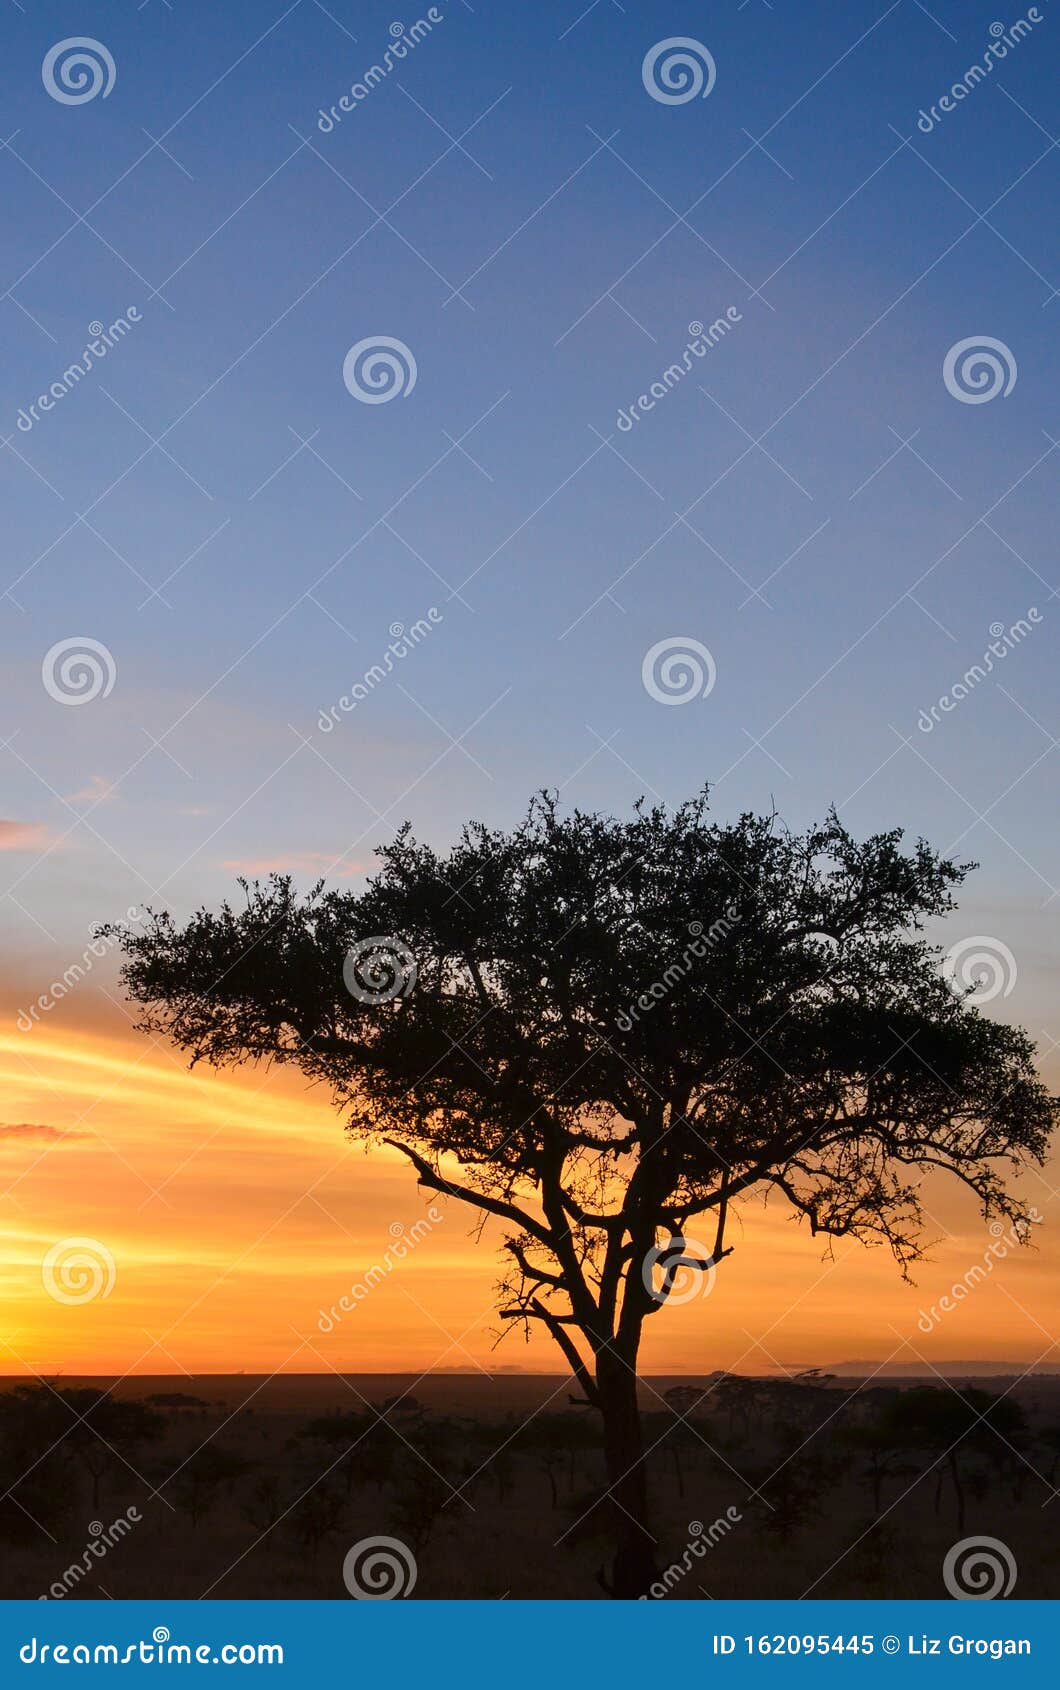 Serengeti National Park, Tanzania Sunrise Sunset Times